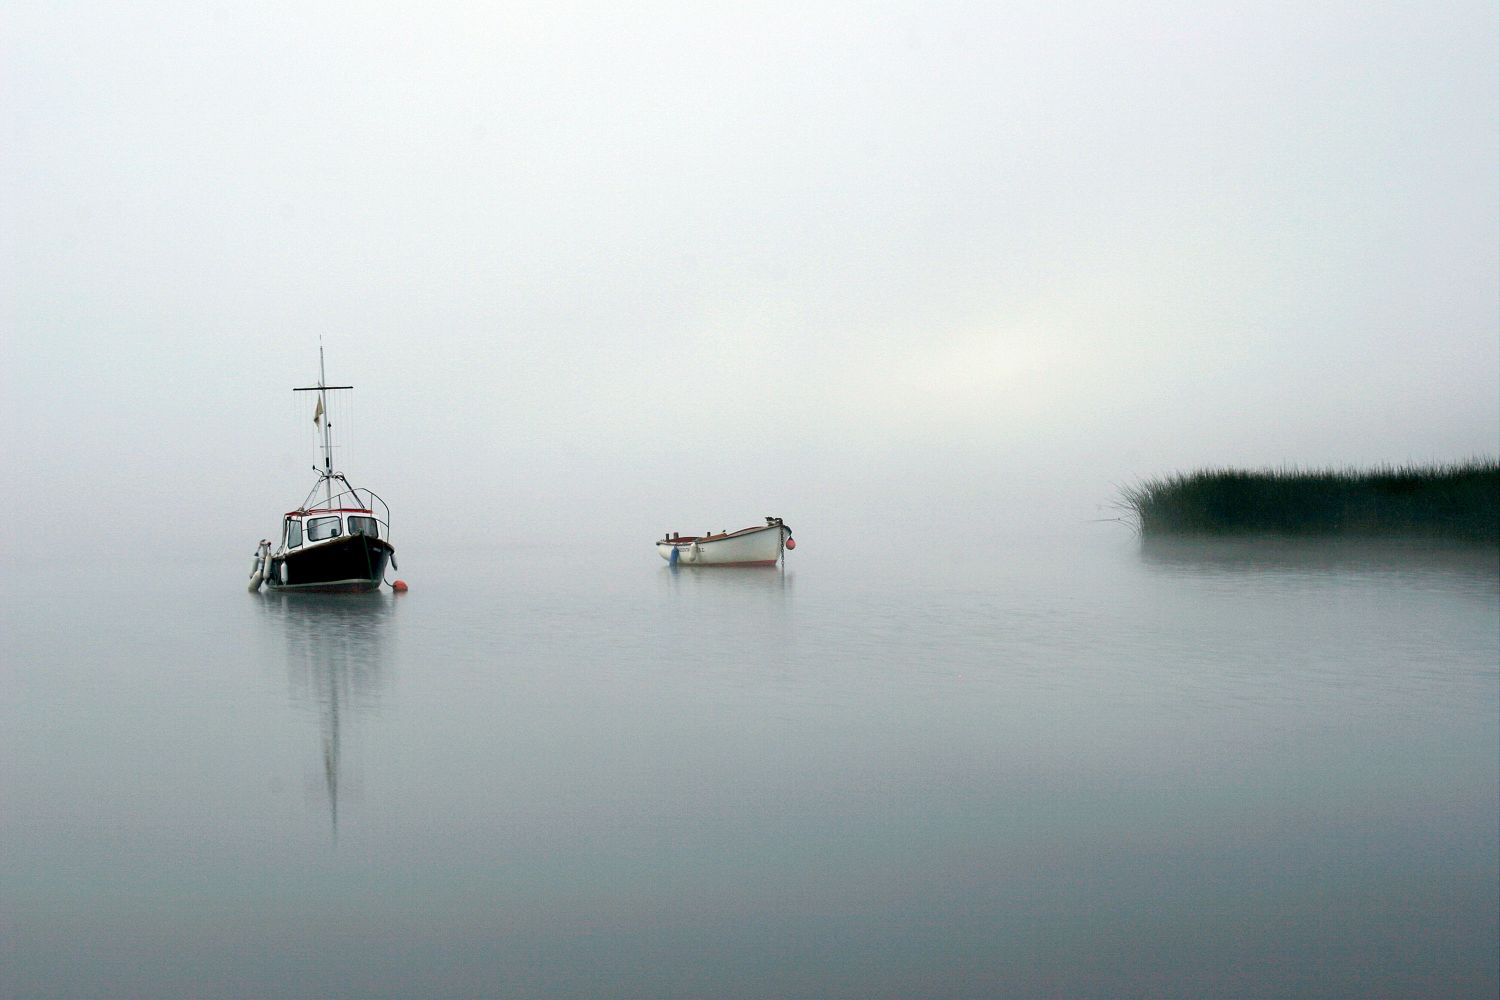 Early morning mist at Bassenthwaite Lake